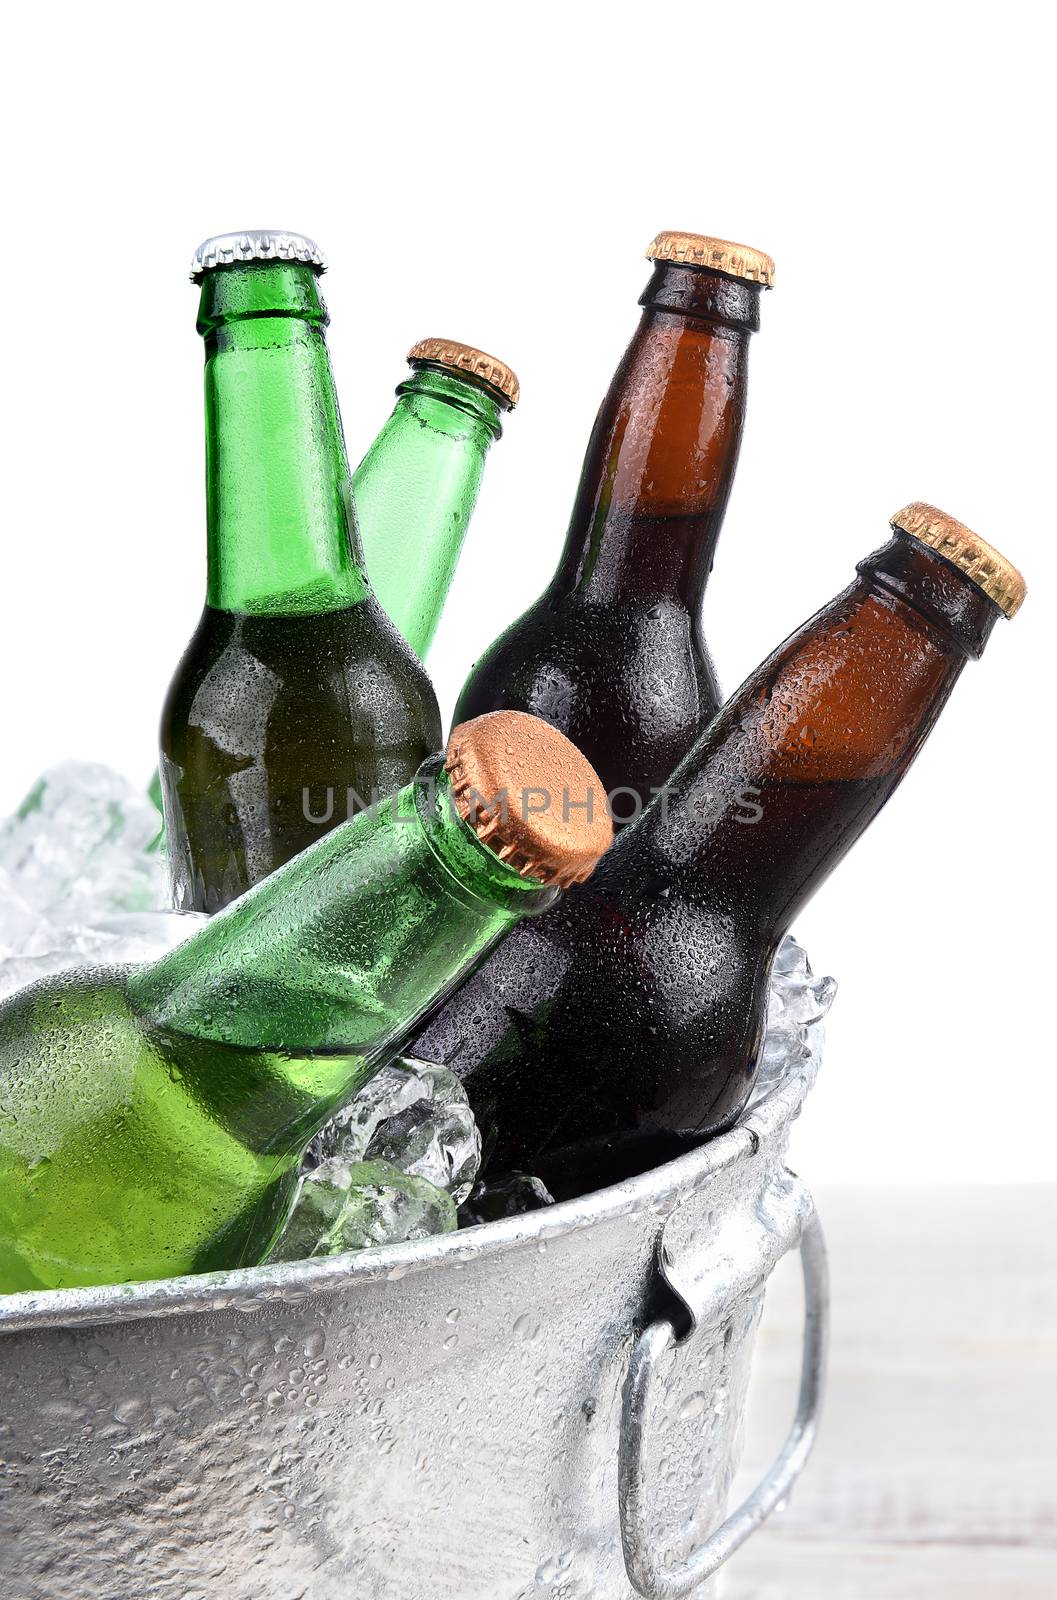 Closeup of green and brown beer bottles in a metal ice bucket. 